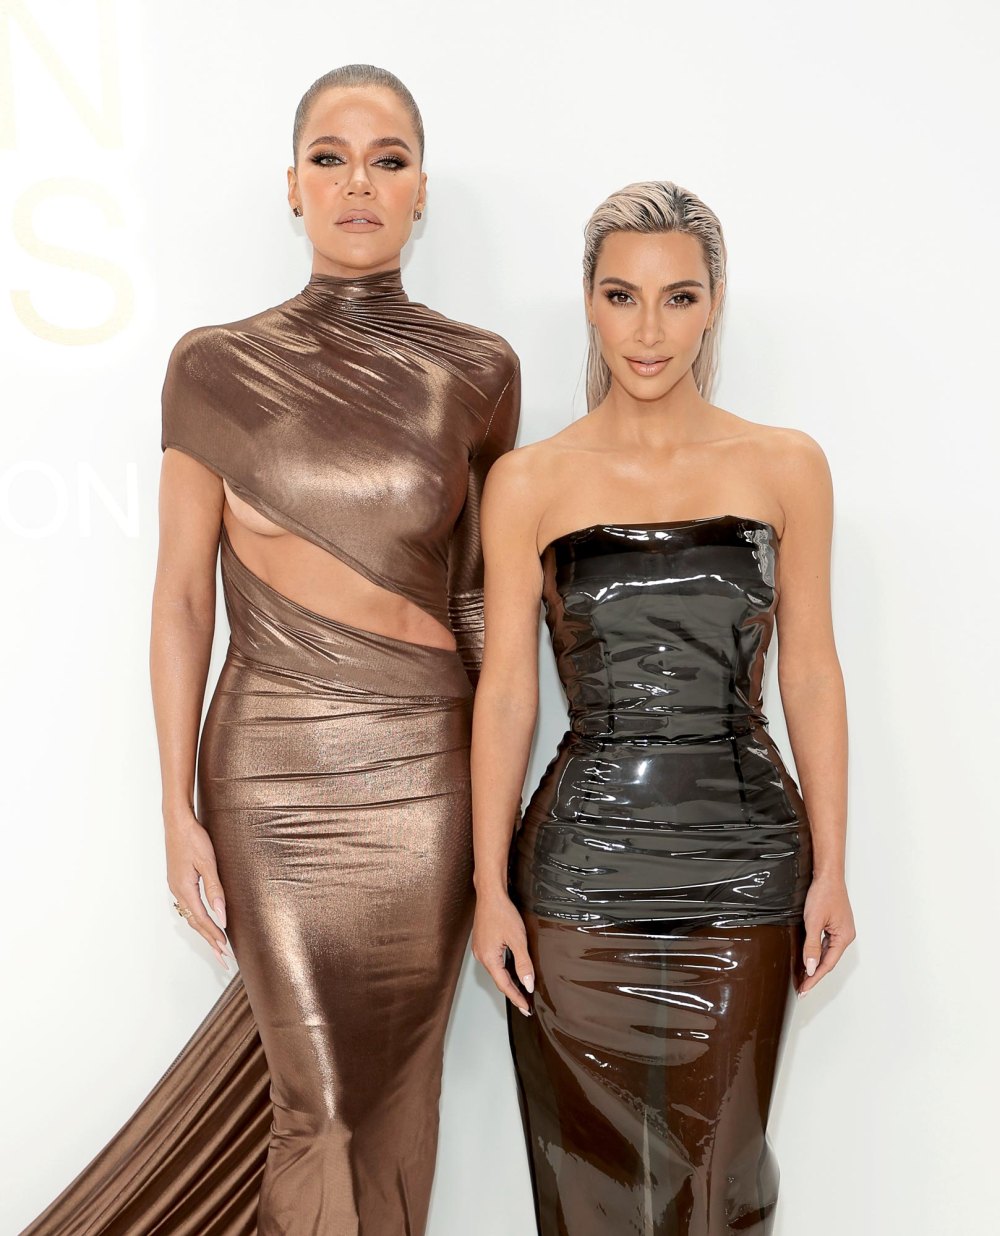 Kim Kardashian Has ‘No Memory’ of Getting Flipped at Khloe Kardashian’s Party